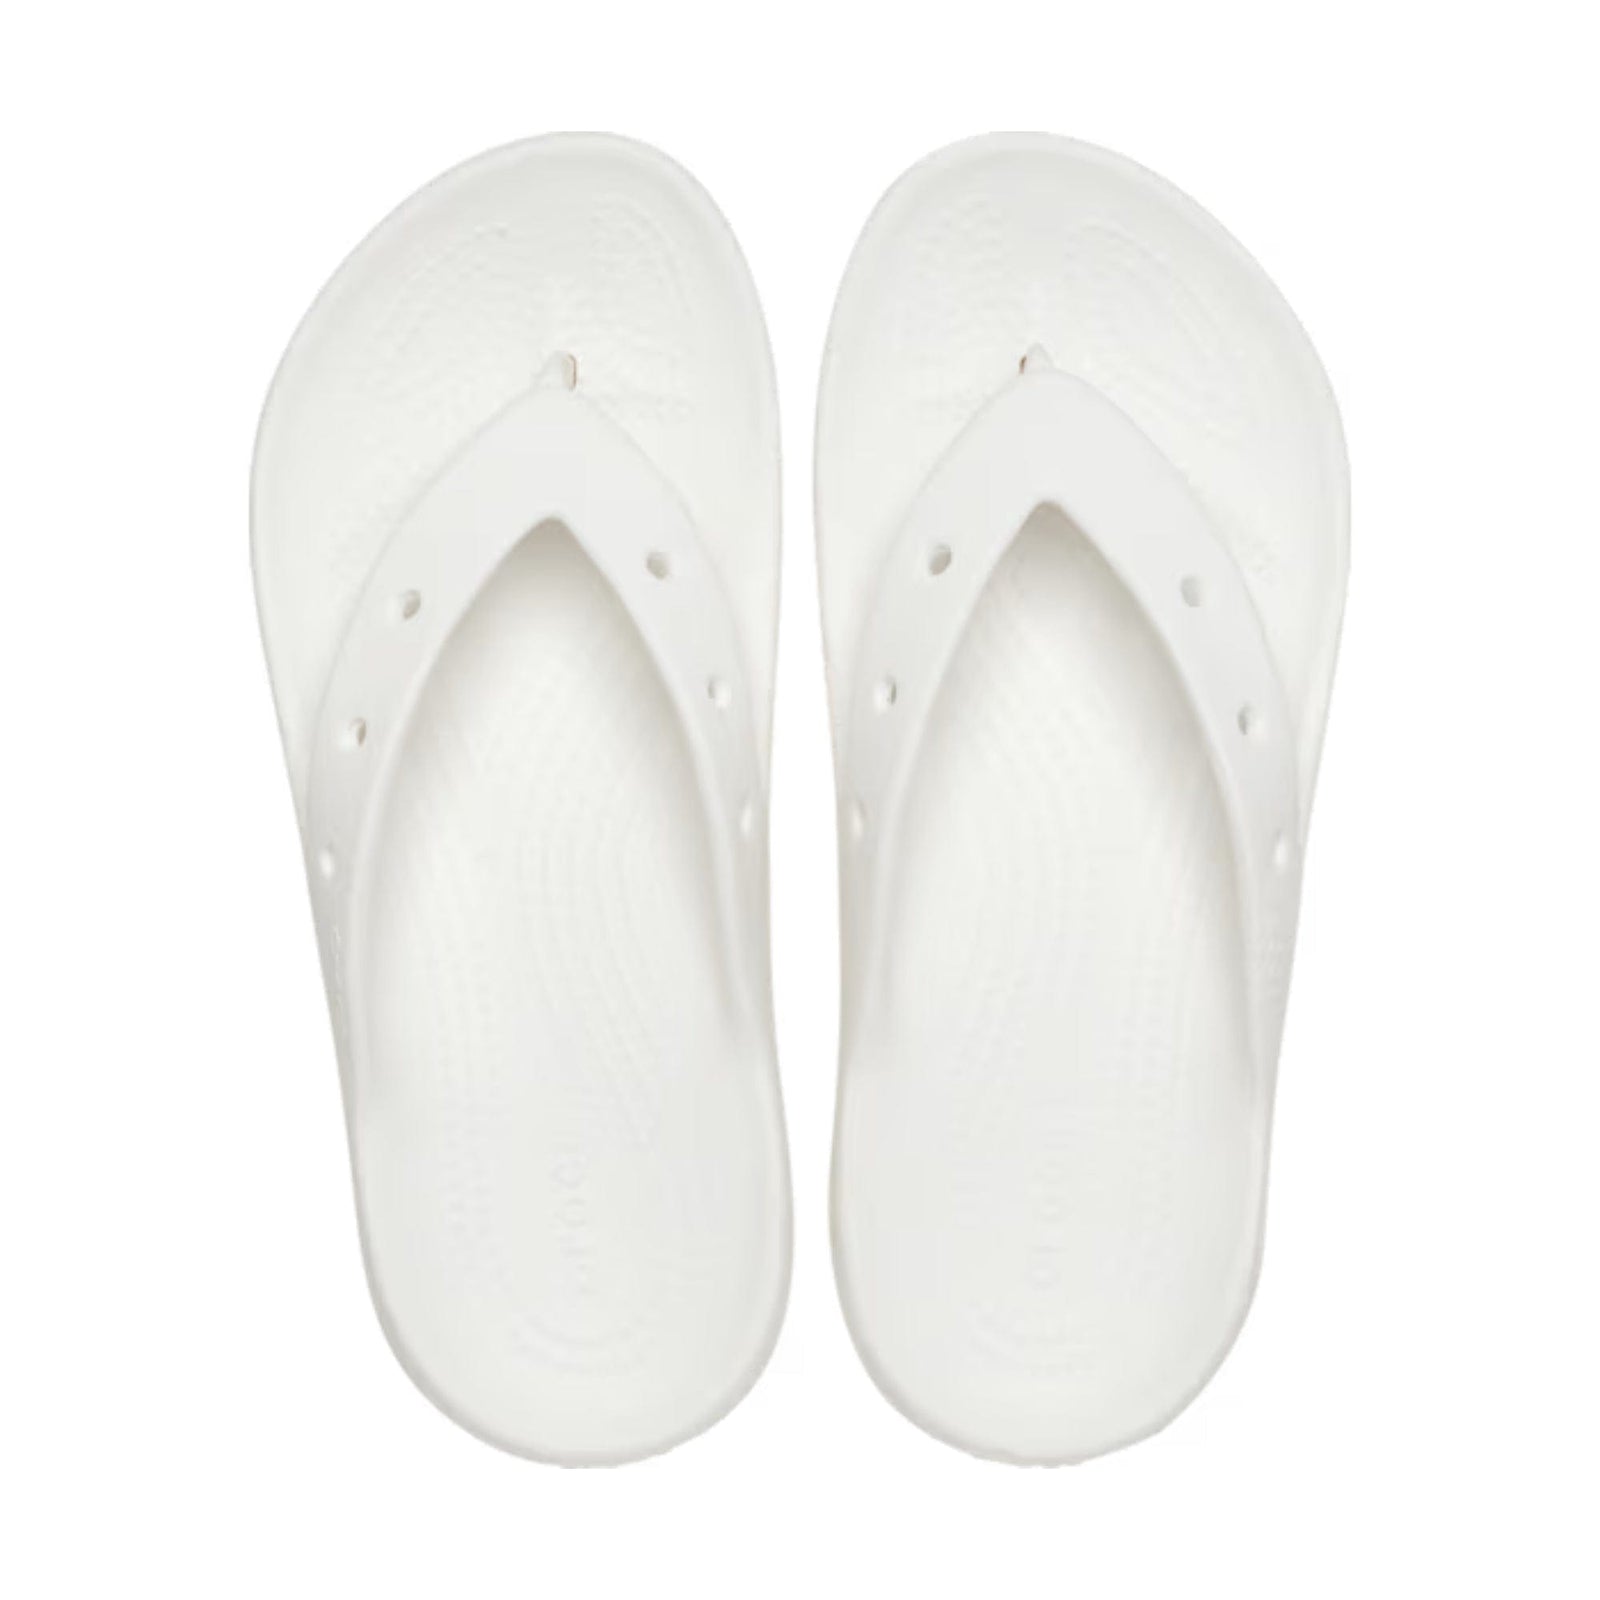 Crocs Classic Flip-flops in White